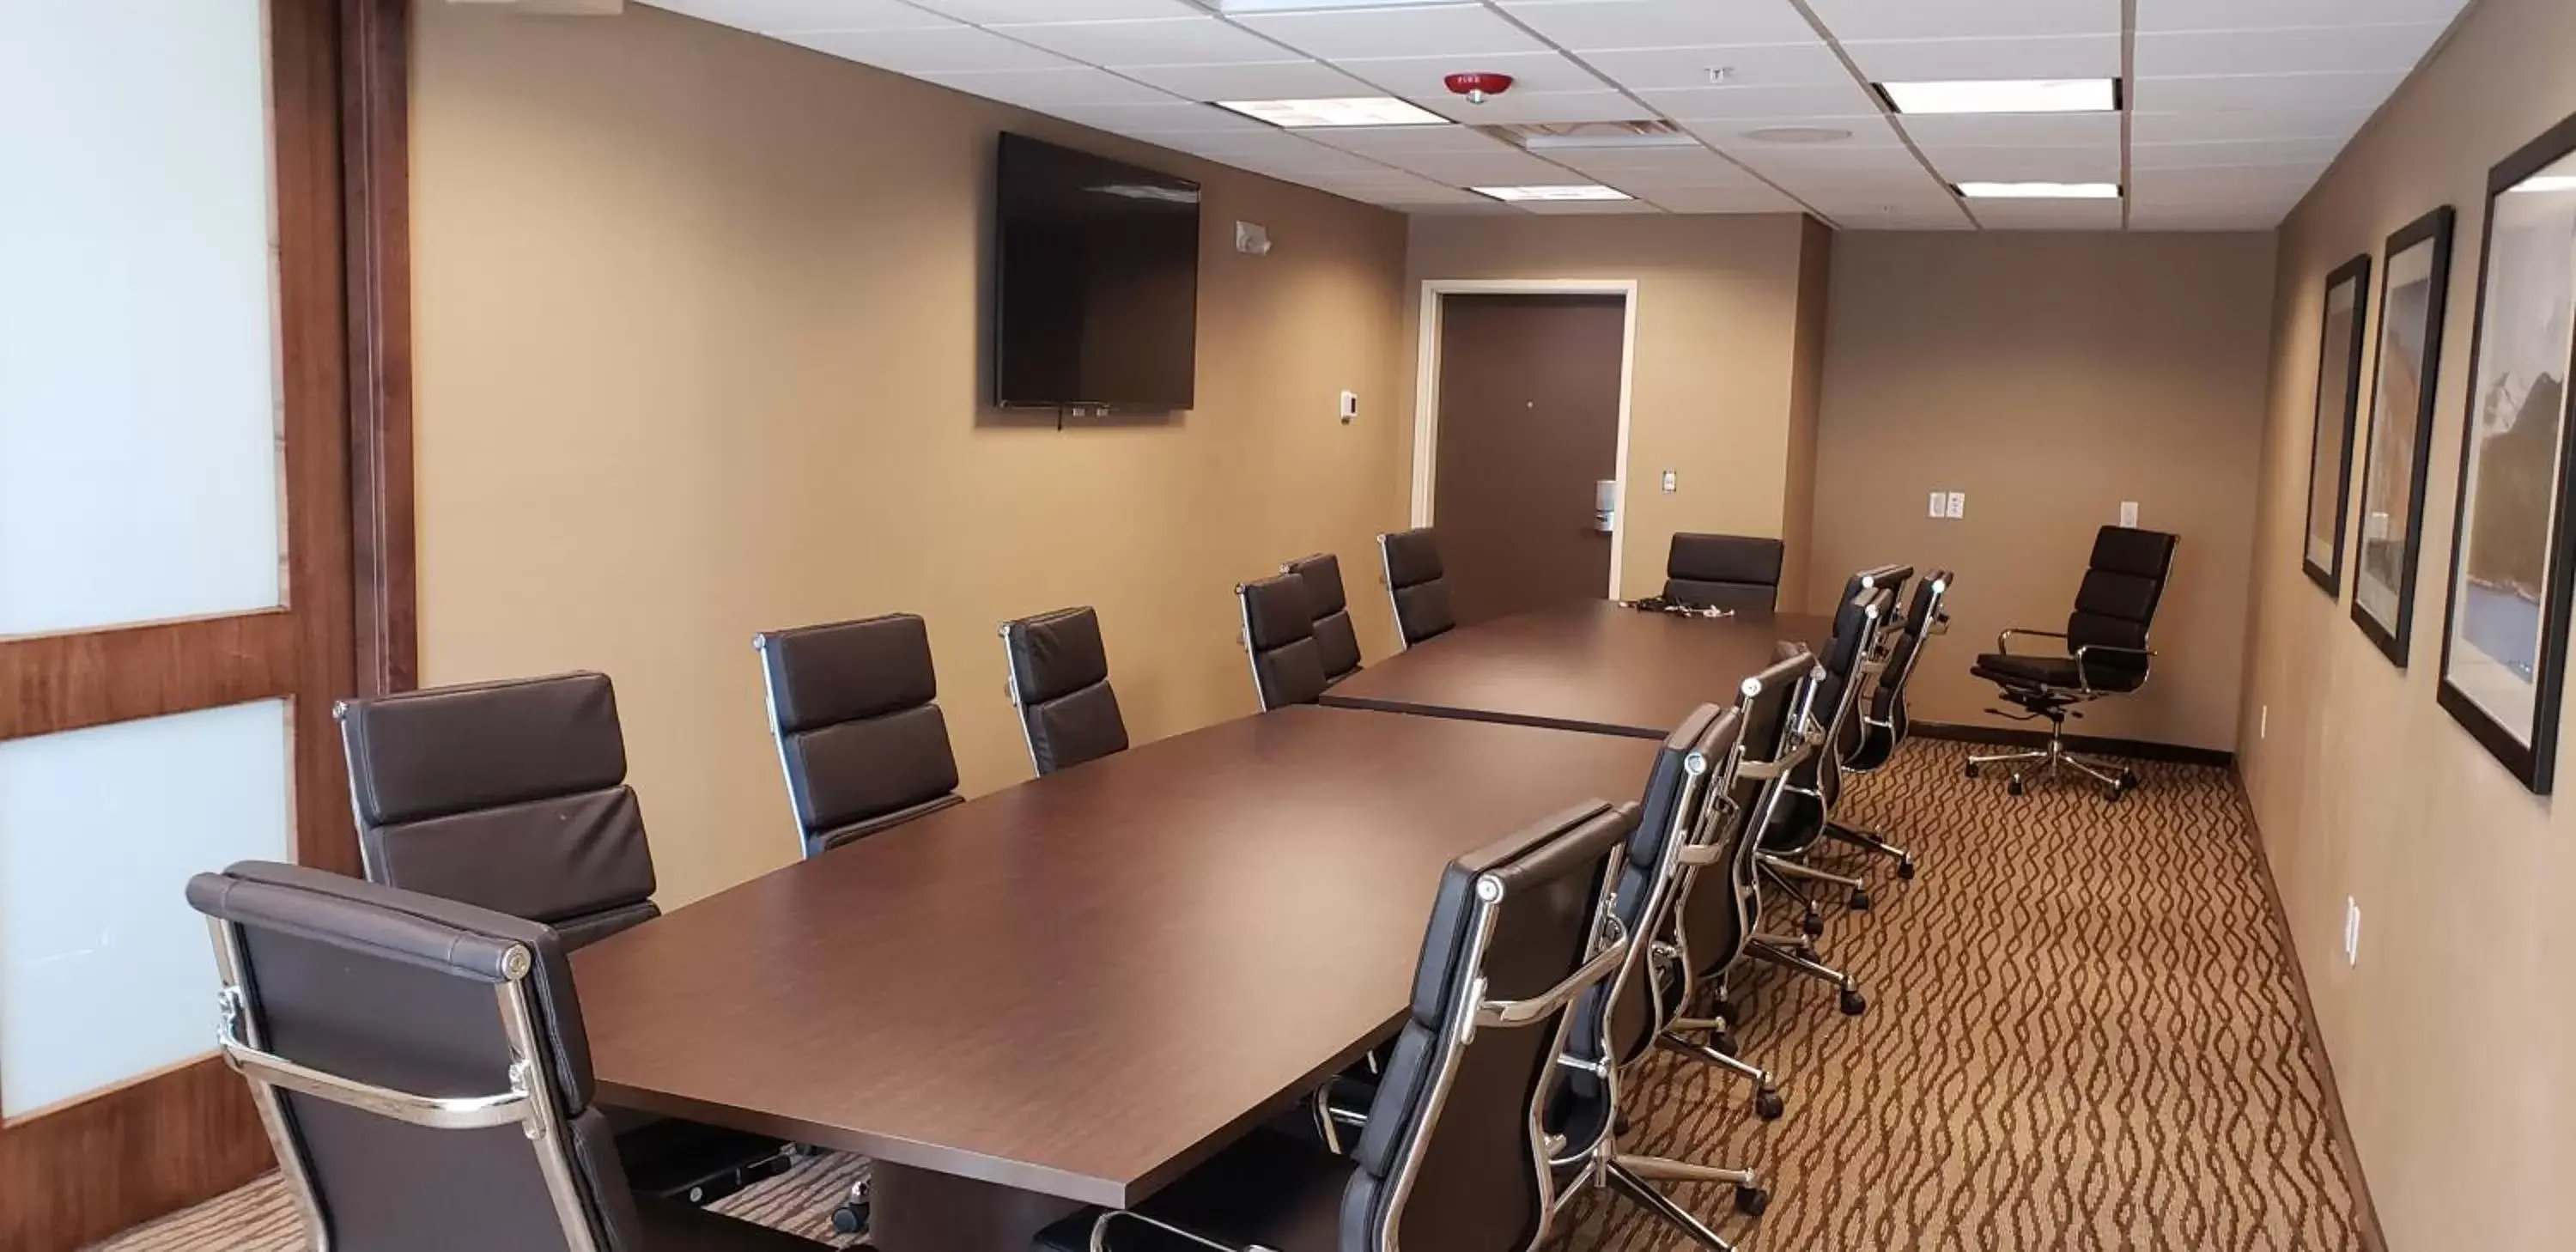 Business facilities in Comfort Suites Denver near Anschutz Medical Campus